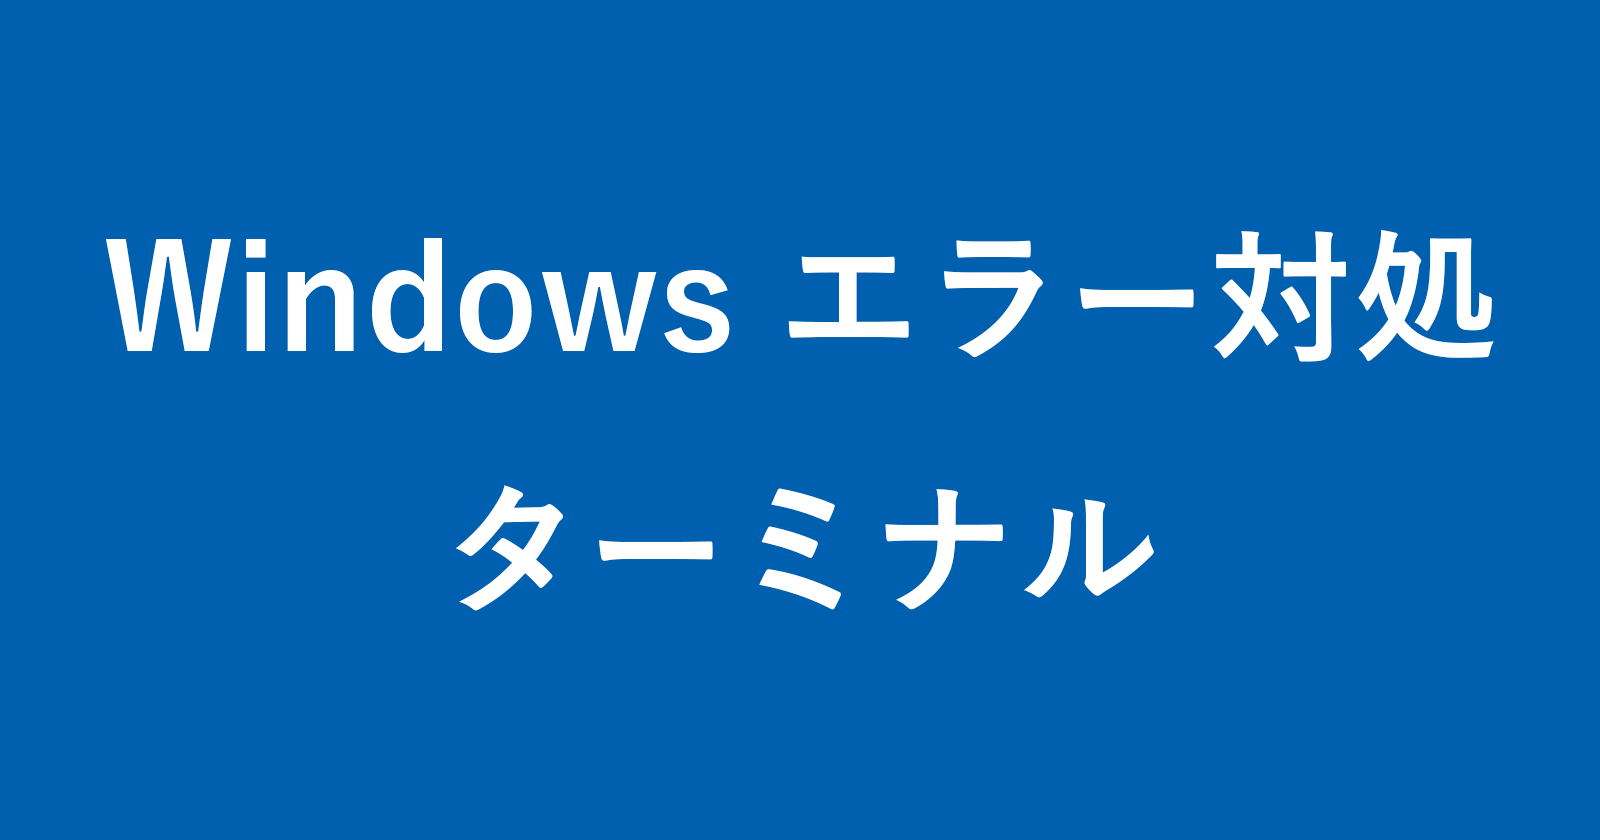 windows terminal error